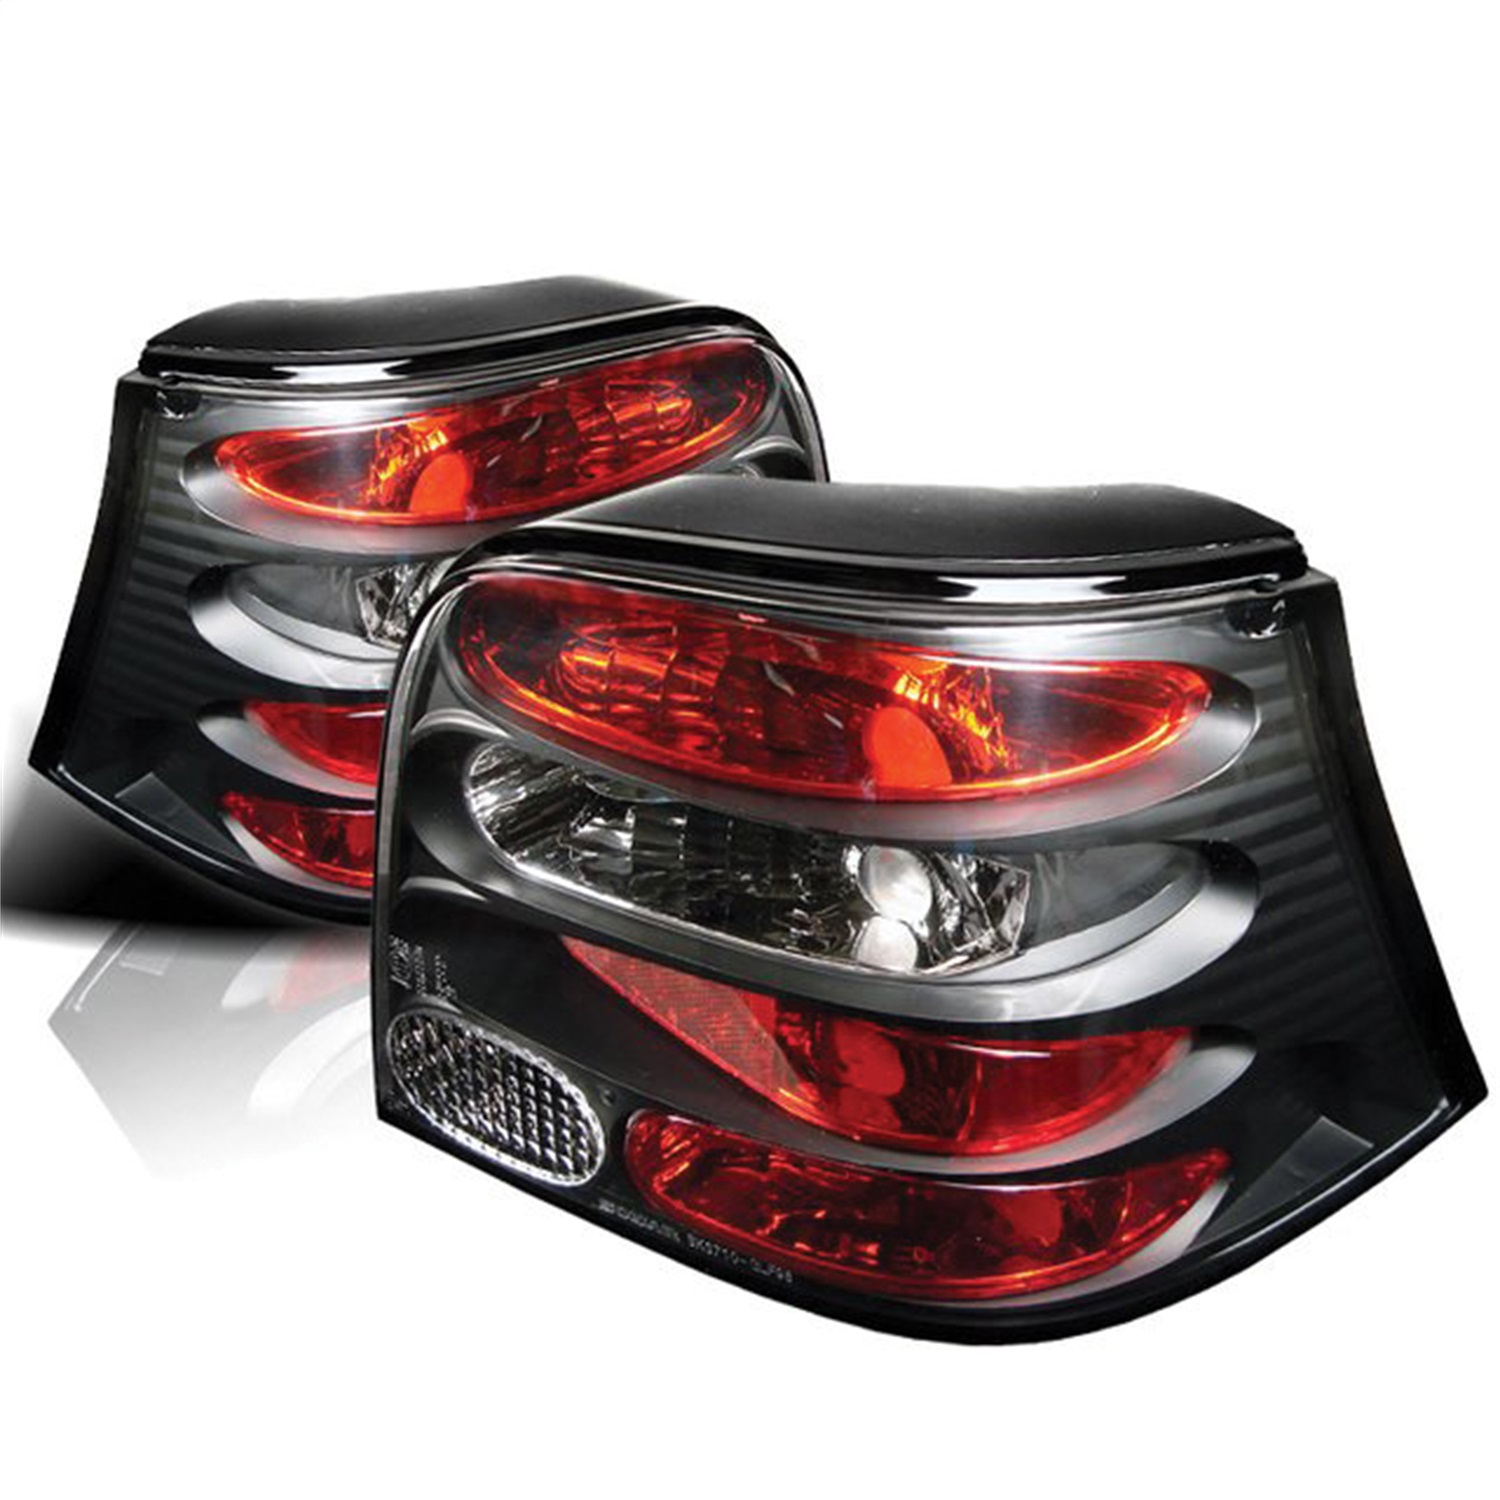 Spyder Auto 5008343 Euro Style Tail Lights Fits 99-04 Golf